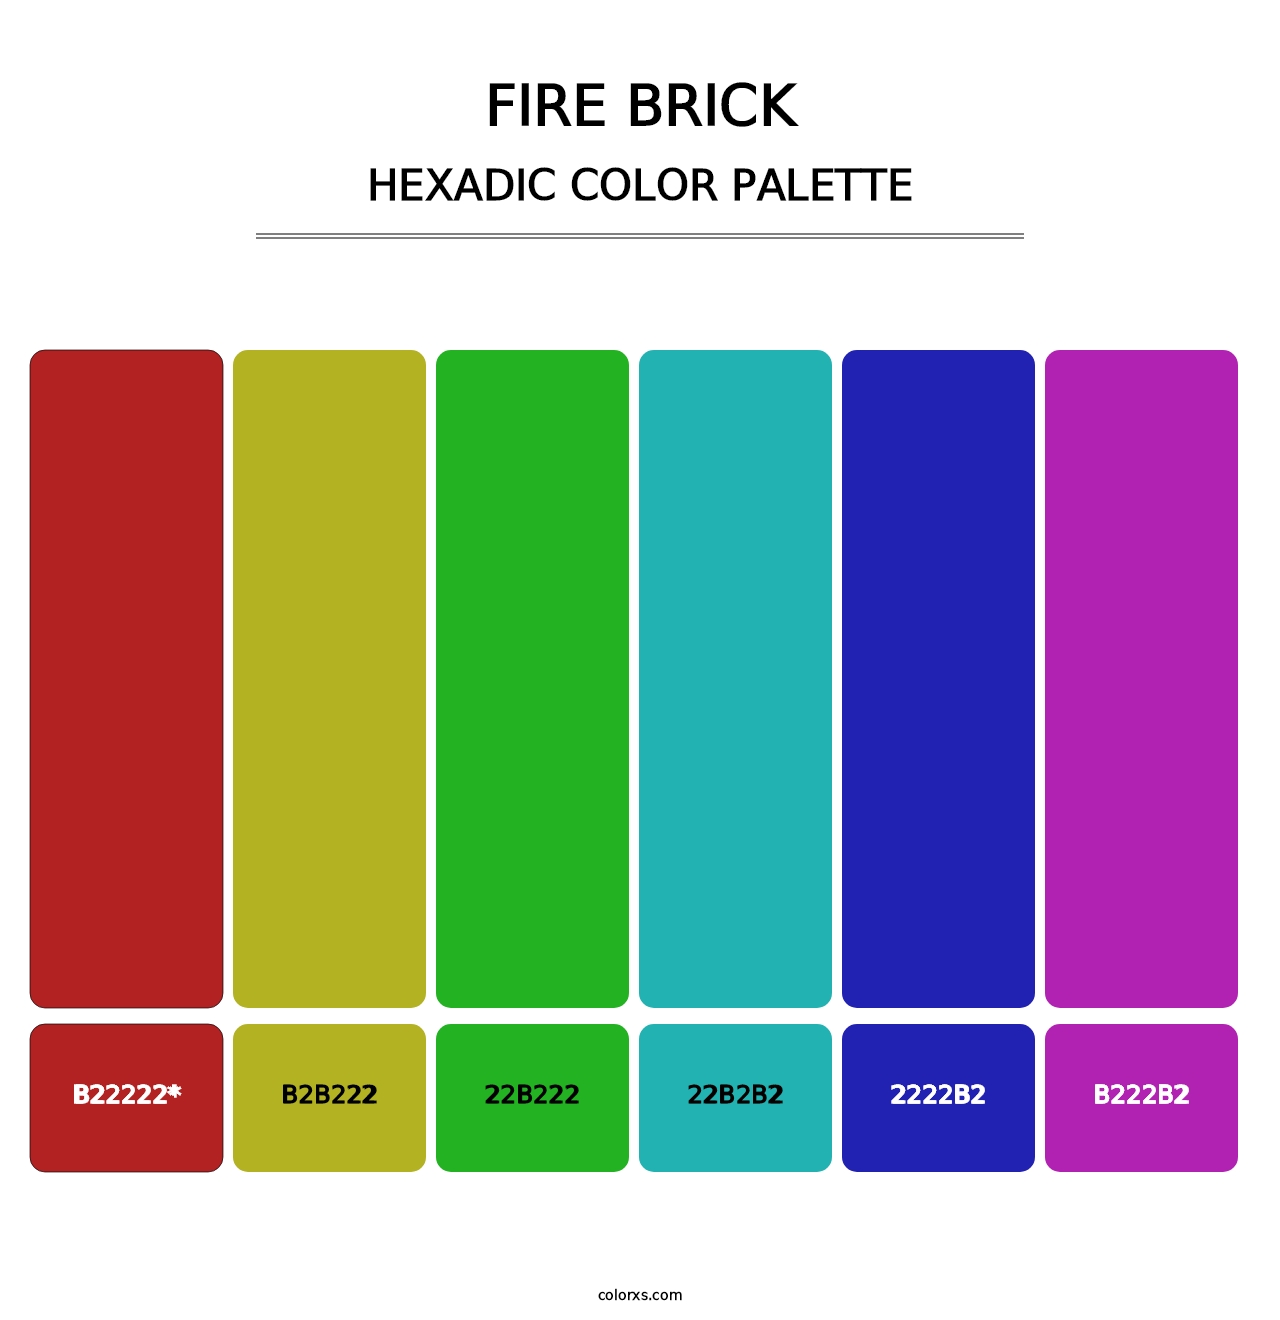 Fire Brick - Hexadic Color Palette